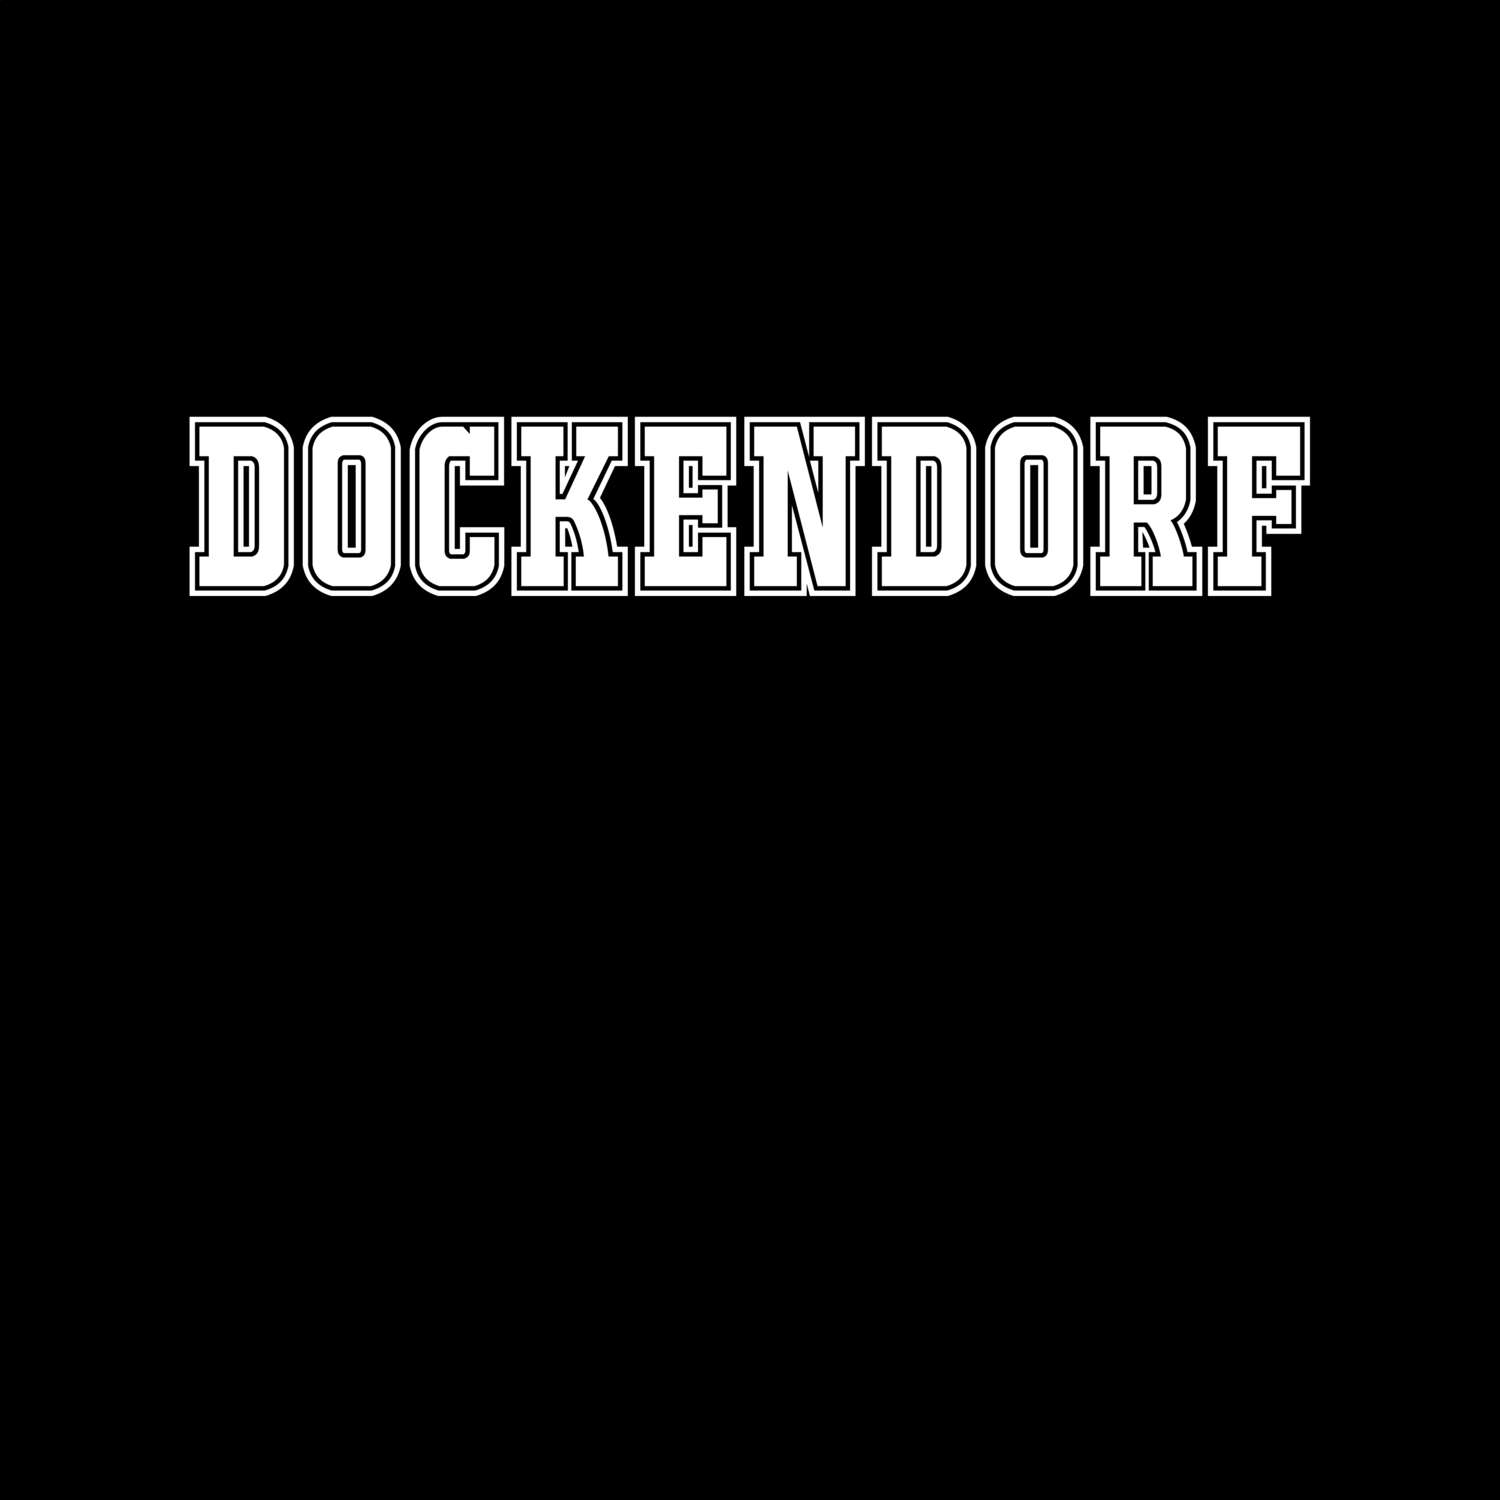 Dockendorf T-Shirt »Classic«